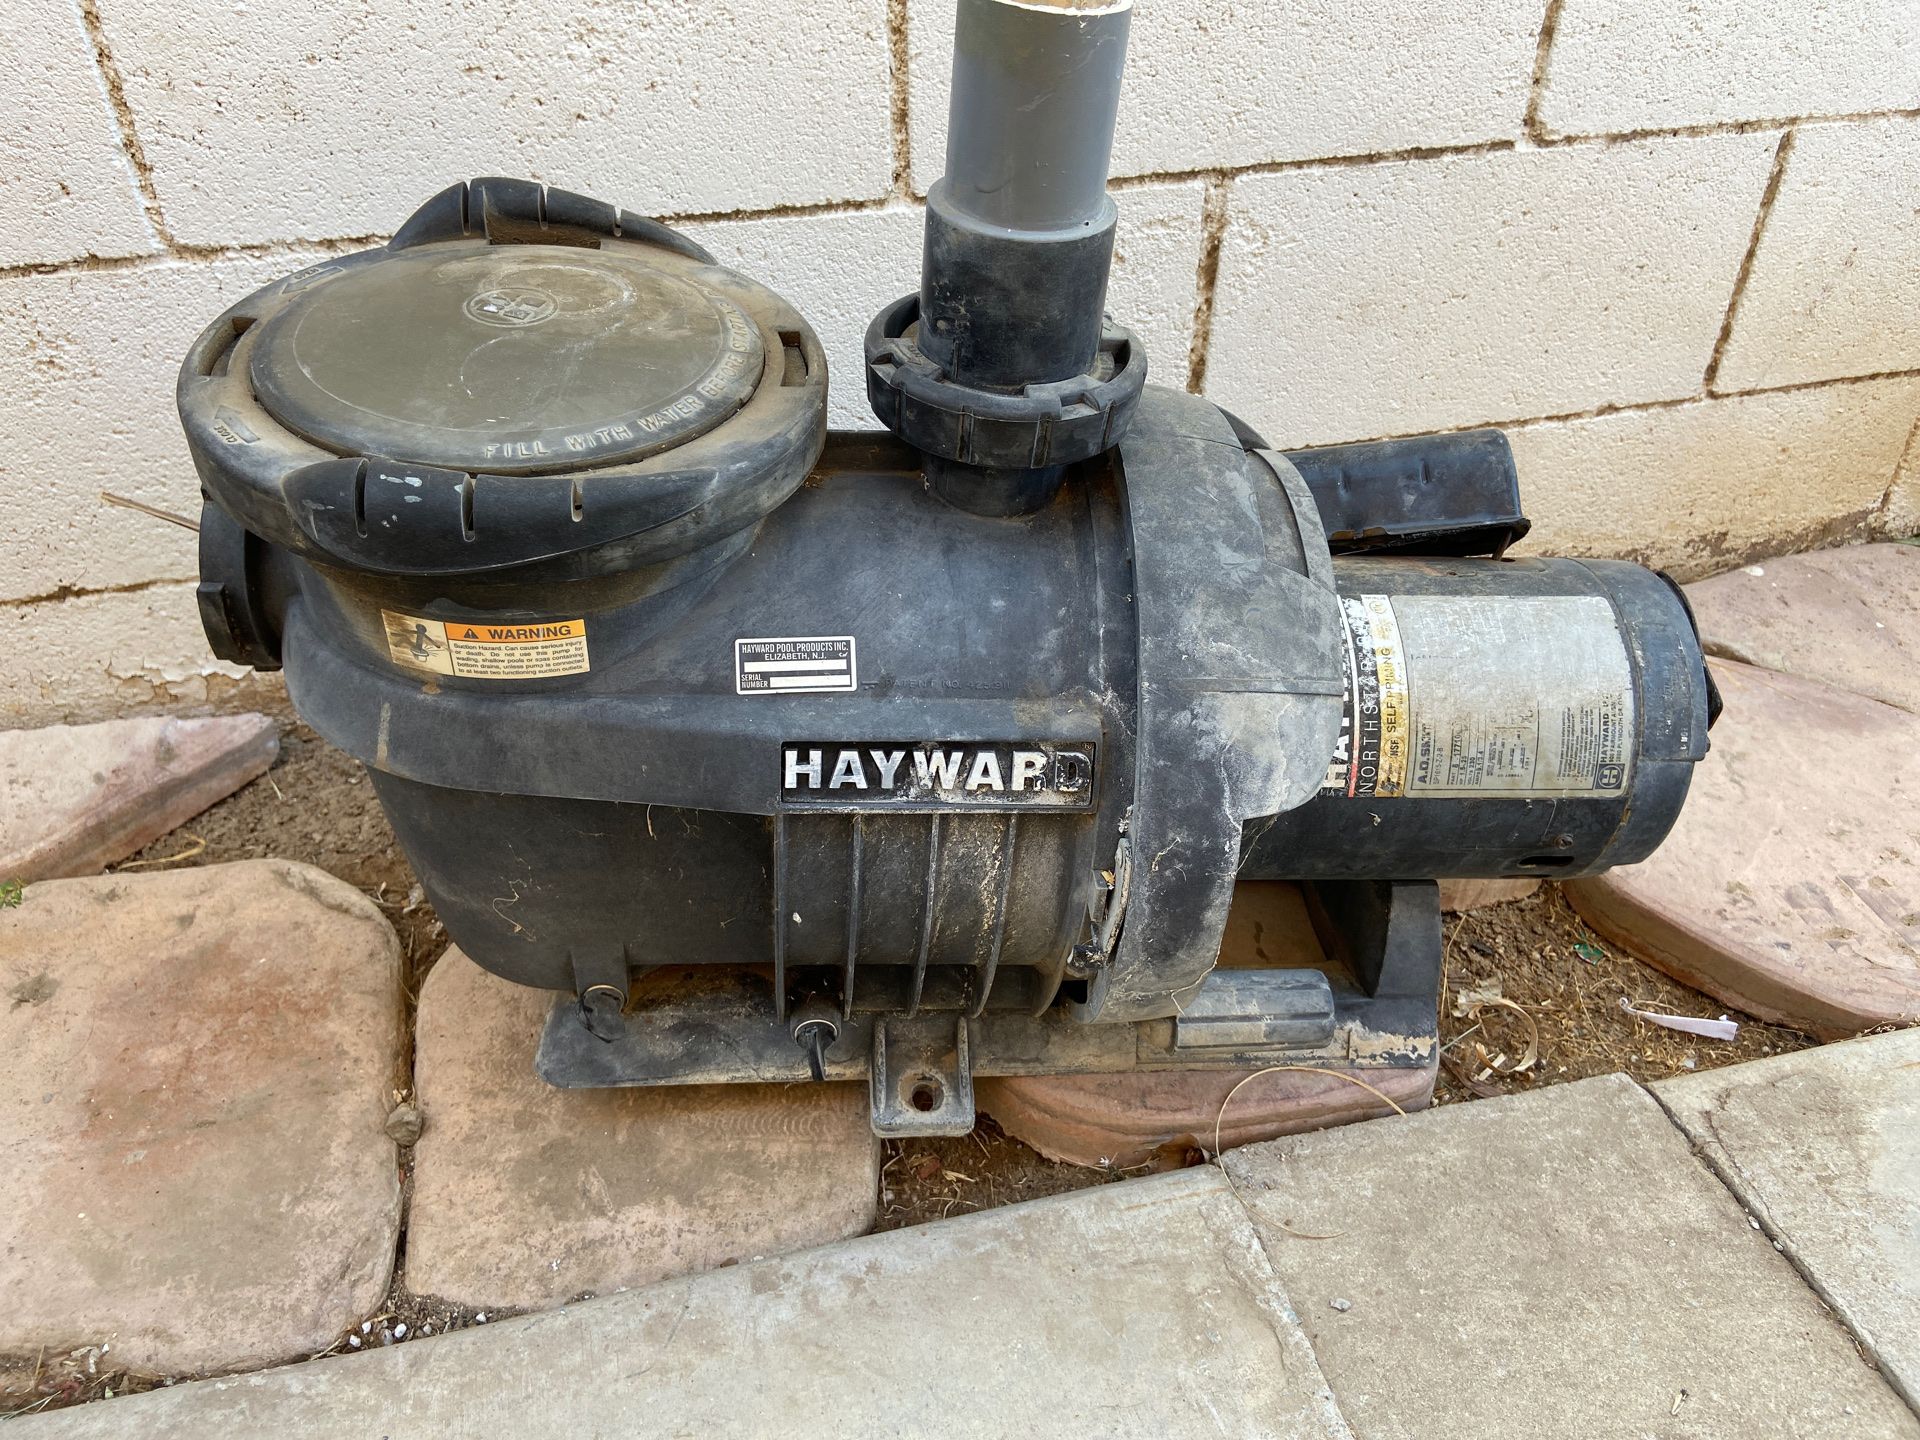 Hayward pool pump